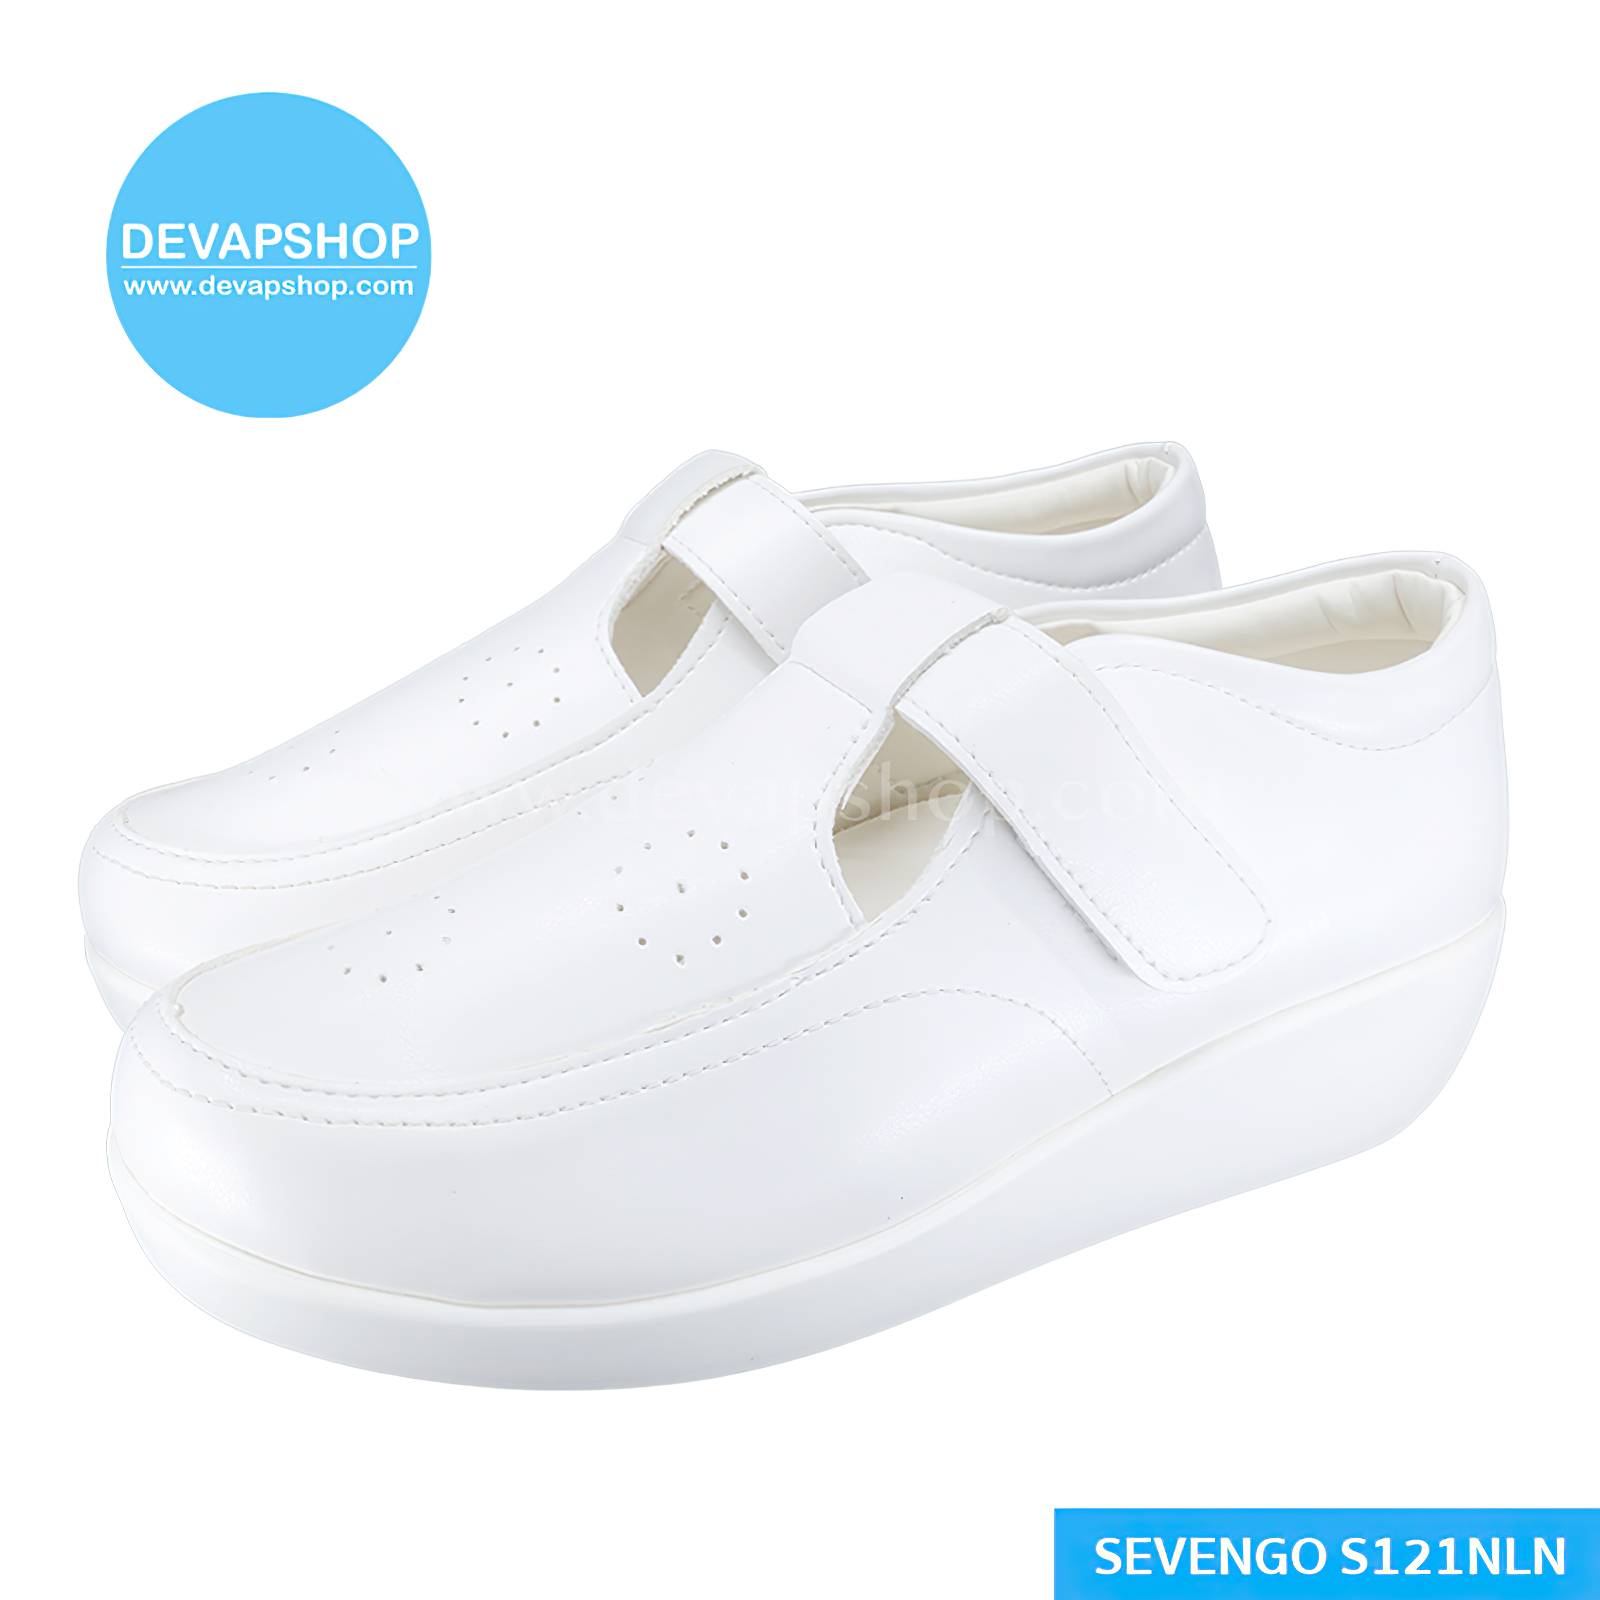 SEVENGO รหัส S121NLN รองเท้าพยาบาล รองนักศึกษาพยาบาล รองเท้าสีขาว Nurse Shoes By DEVAPSHOP สี สีขาว สี สีขาว